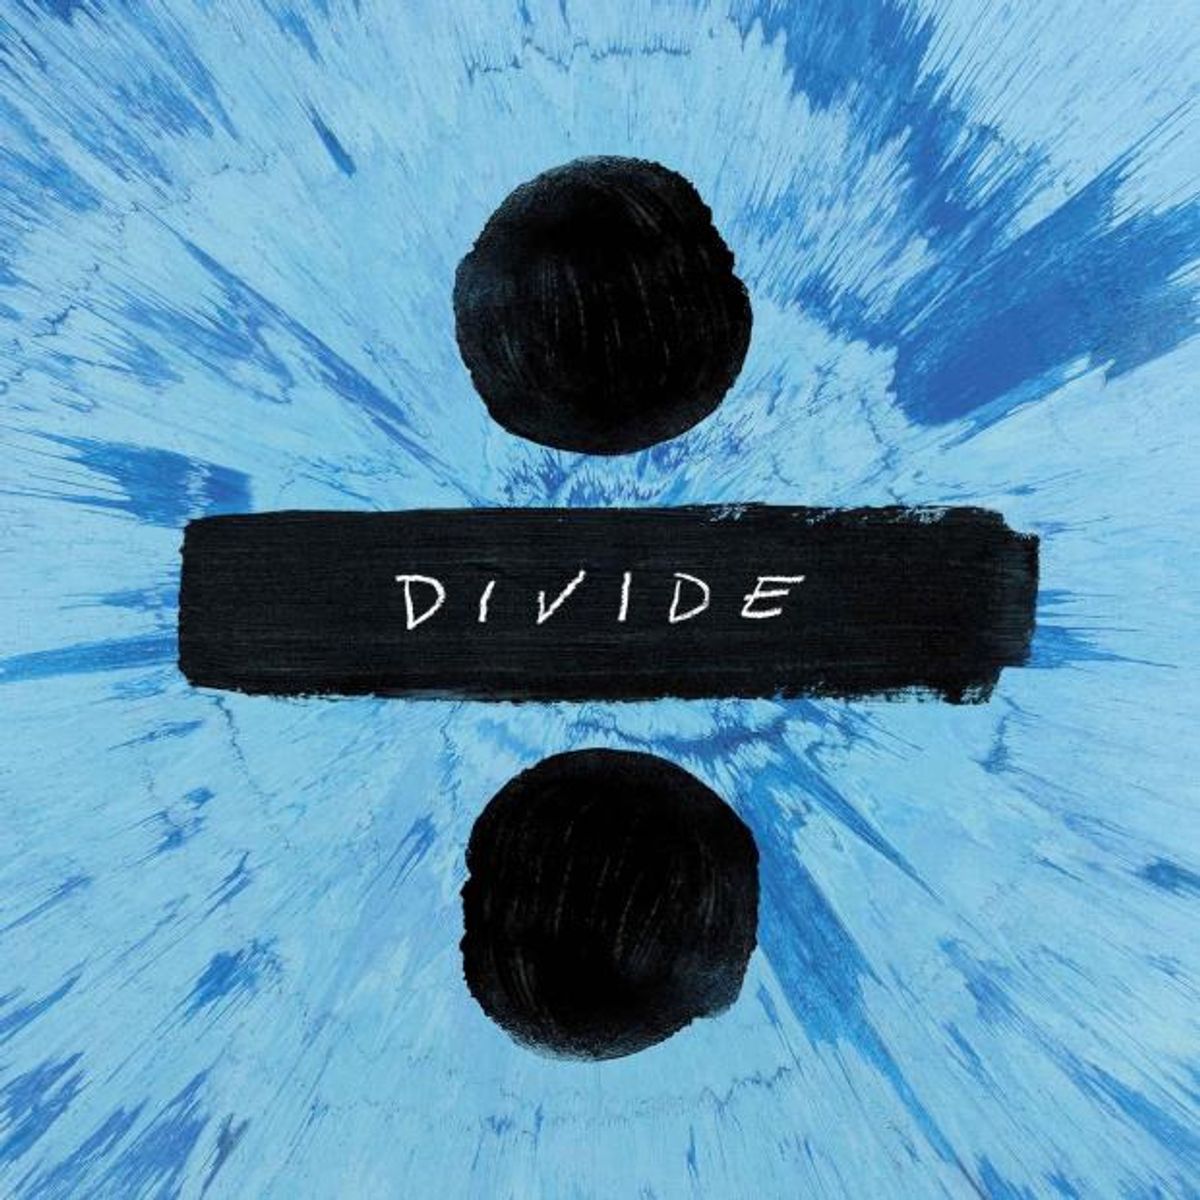 The Best Lyrics From Ed Sheeran's "Divide"